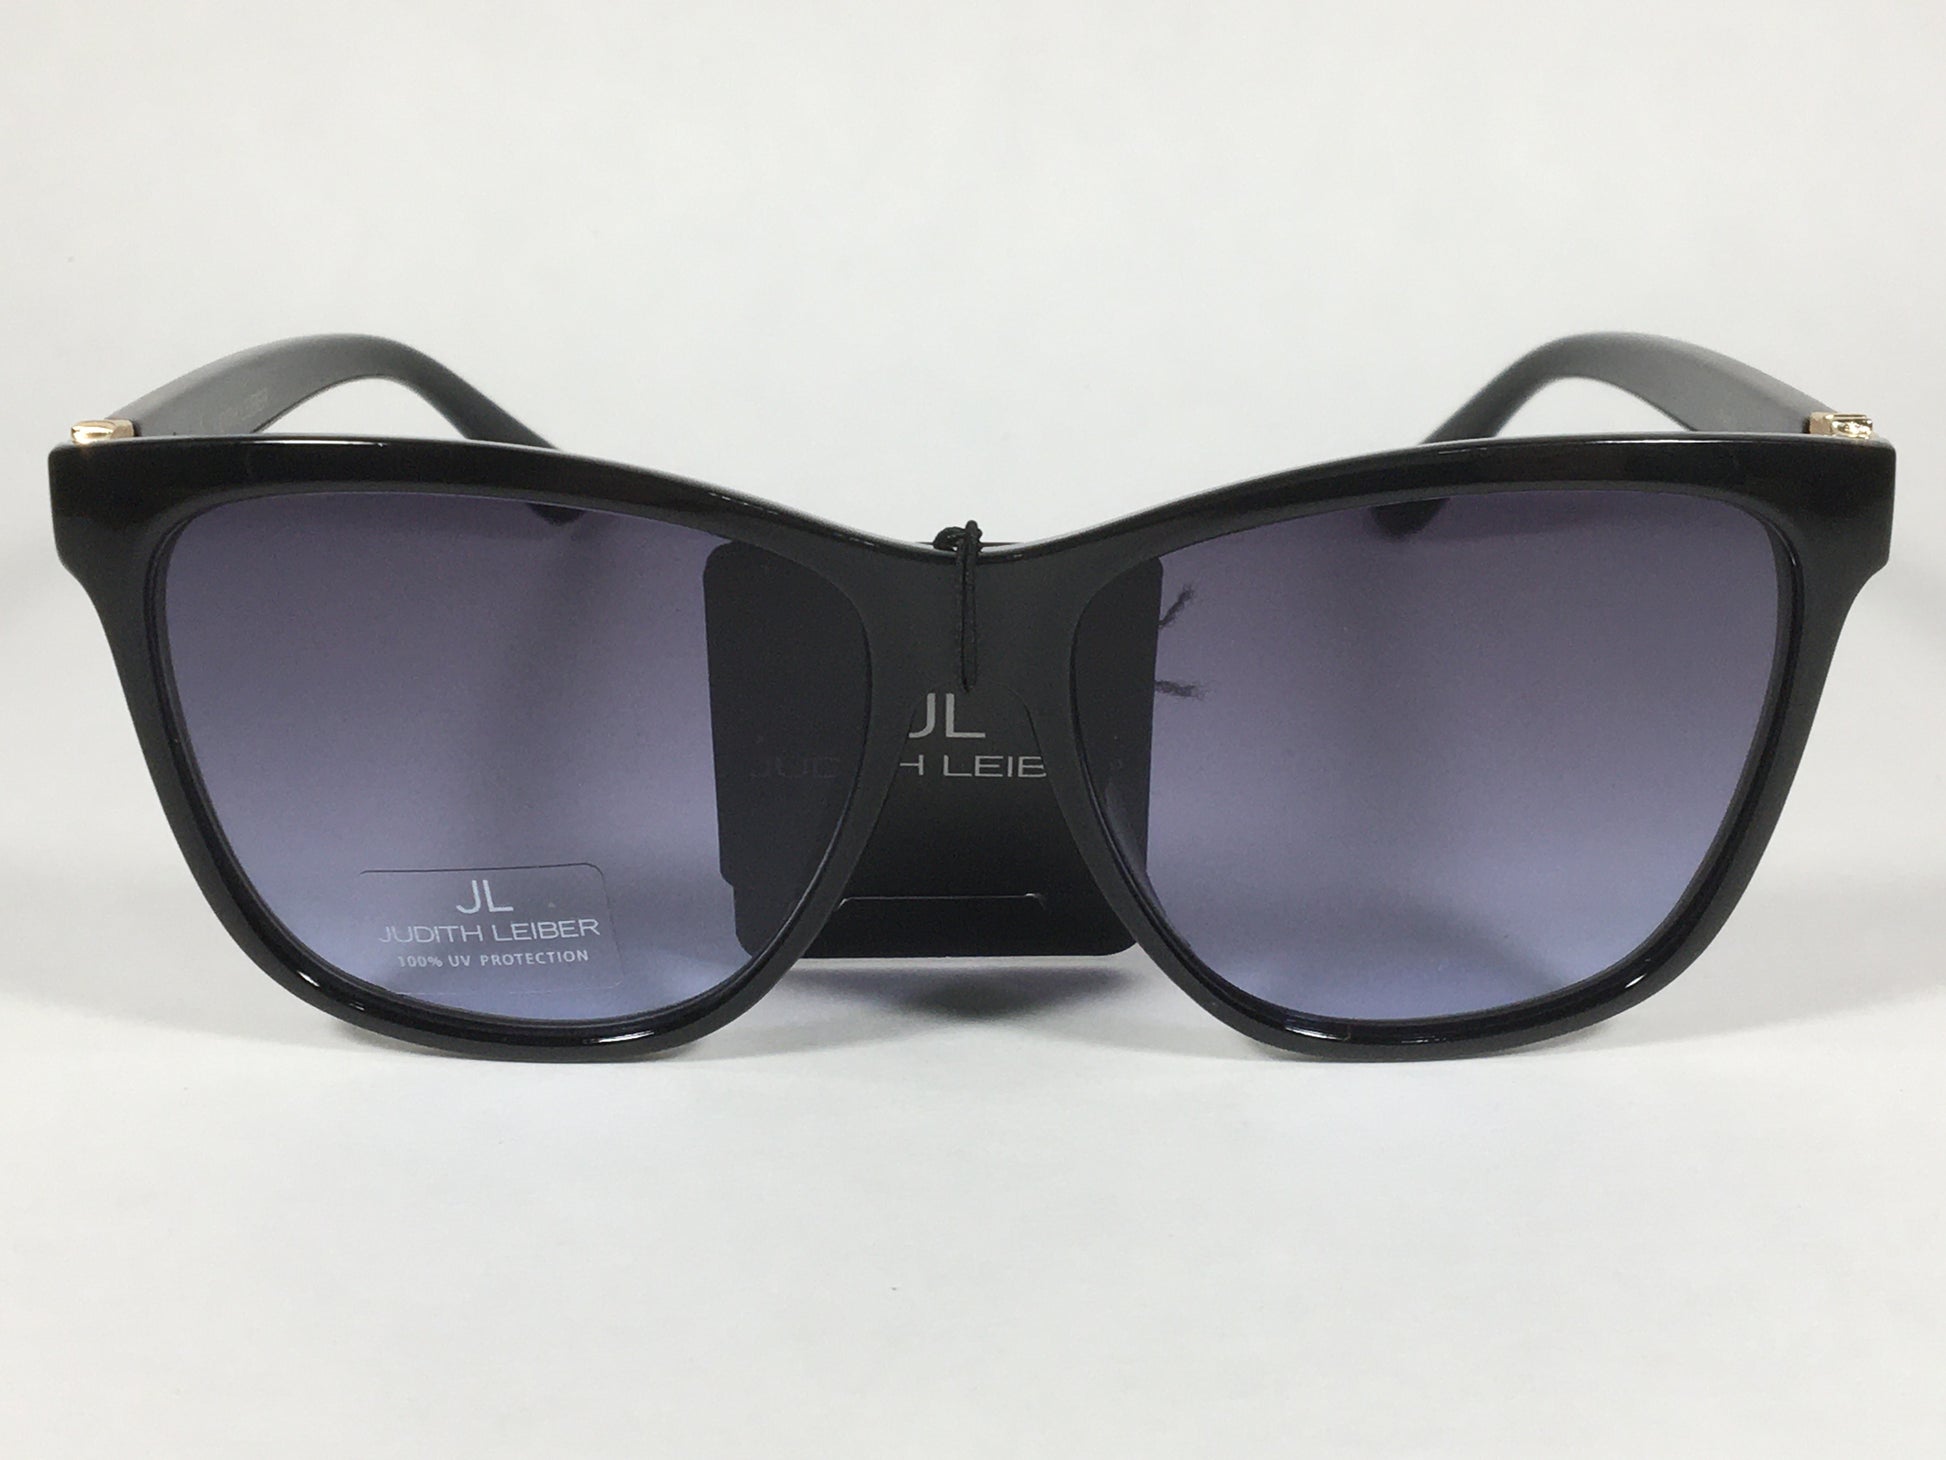 JL By Judith Leiber Peace Square Sunglasses Shiny Black Blue Gray Lens Gold Rhinestone Temples - Sunglasses